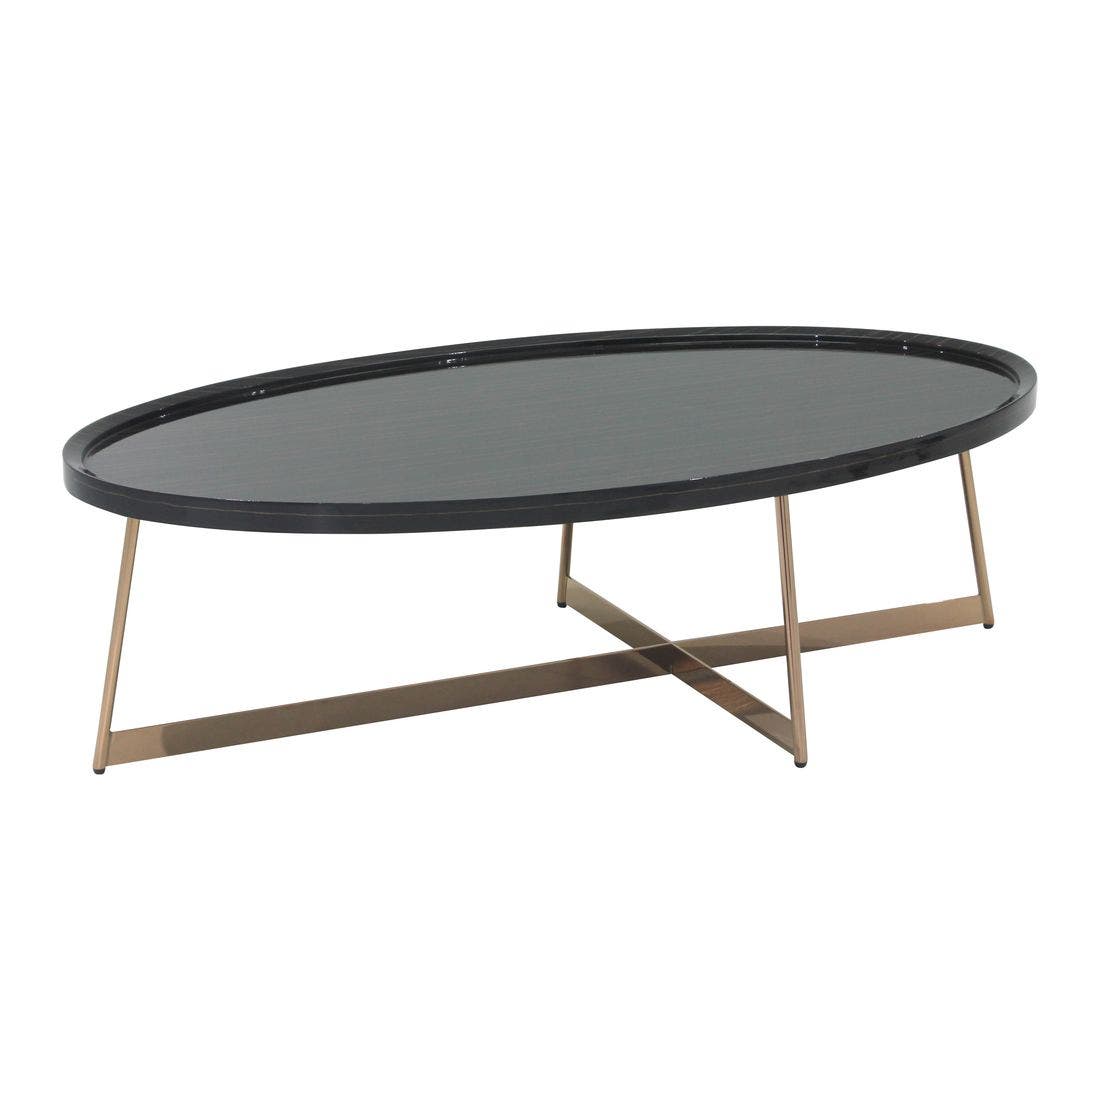 19155434-labia-furniture-living-room-coffee-table-01